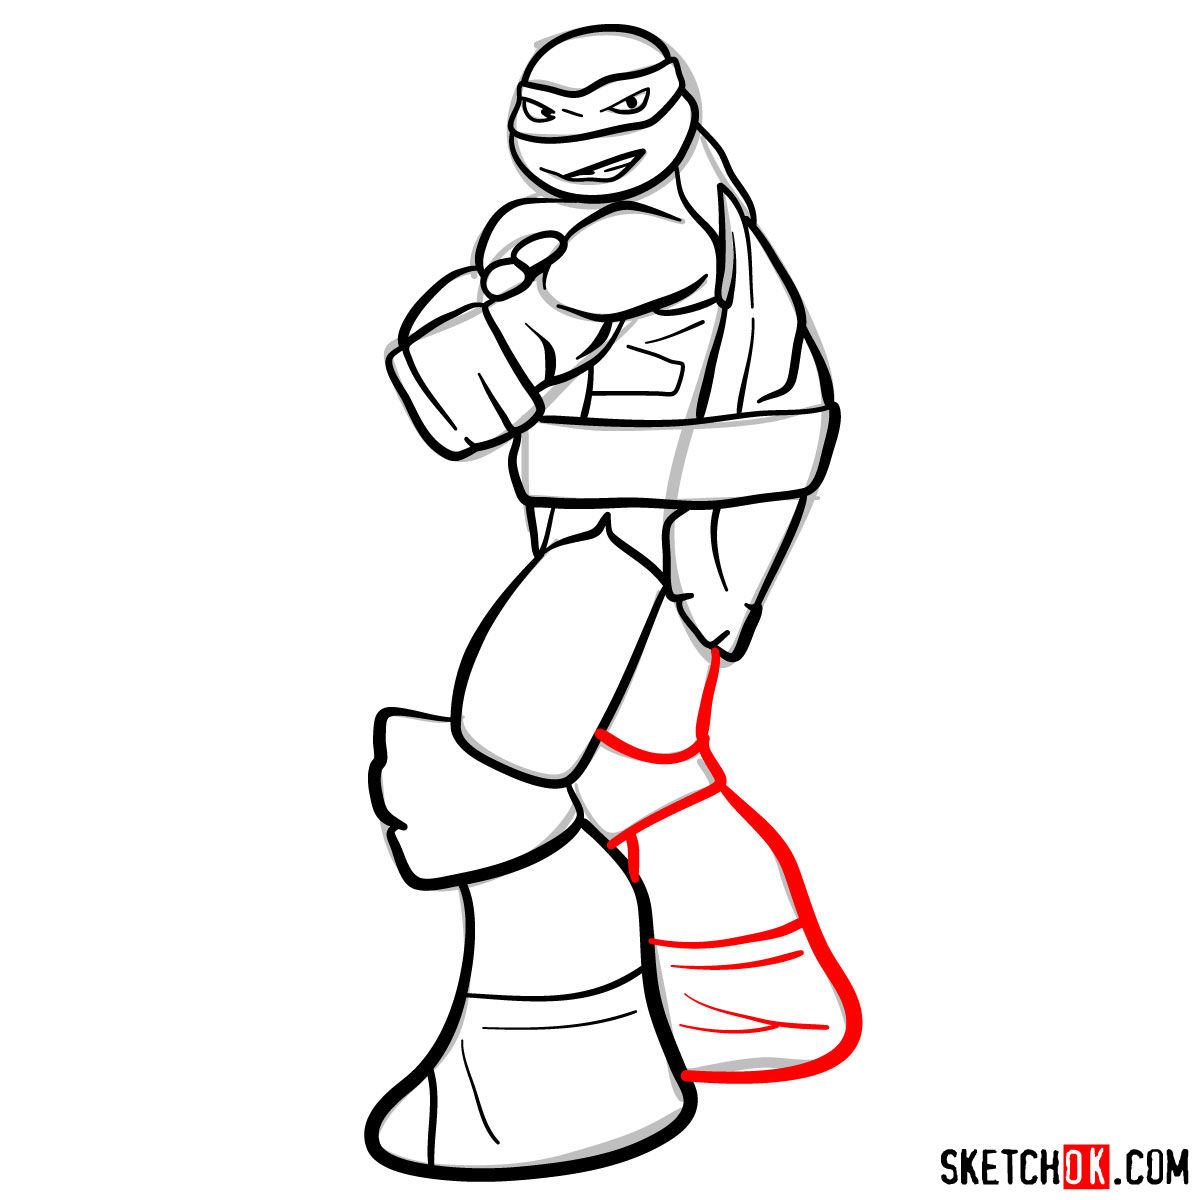 How to draw Raphael ninja turtle cartoon style - step 09